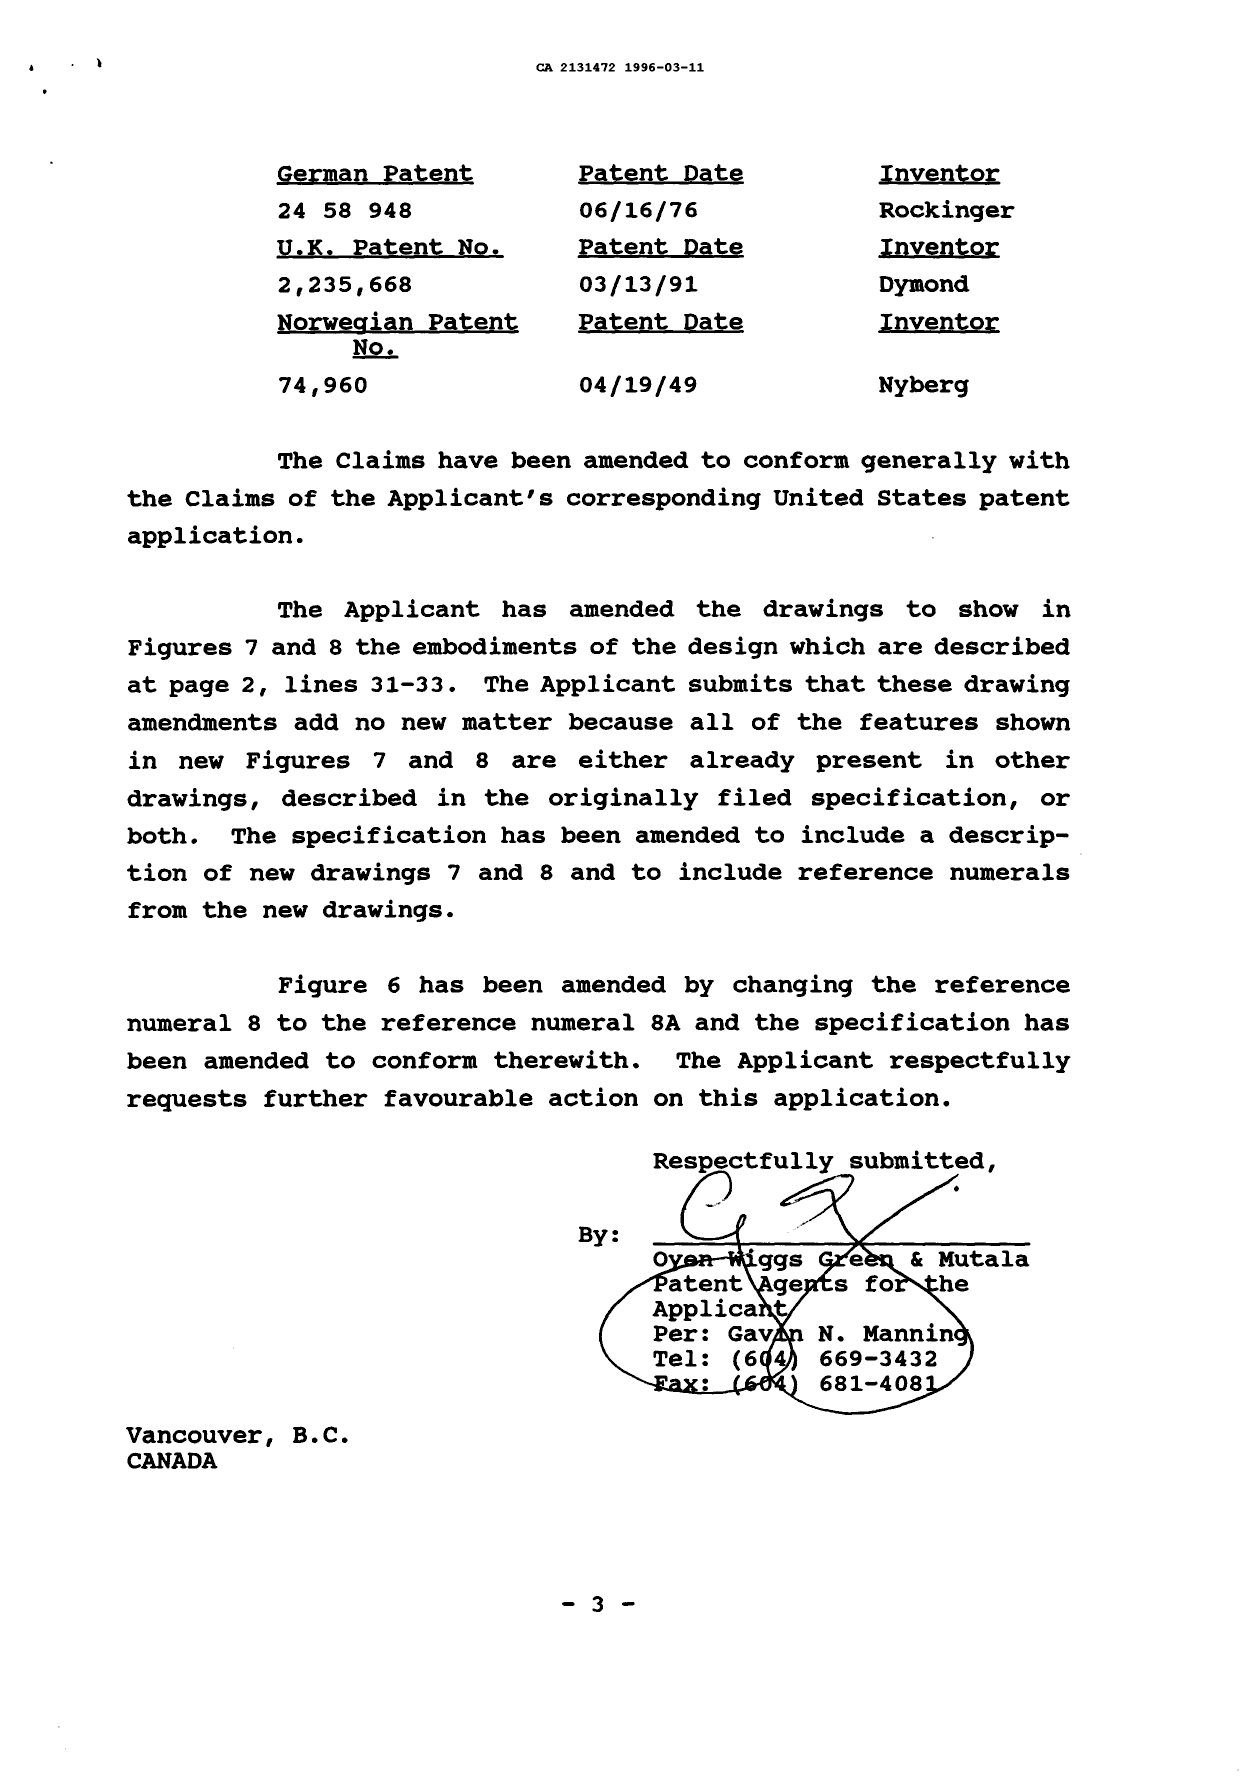 Canadian Patent Document 2131472. Prosecution Correspondence 19960311. Image 3 of 3